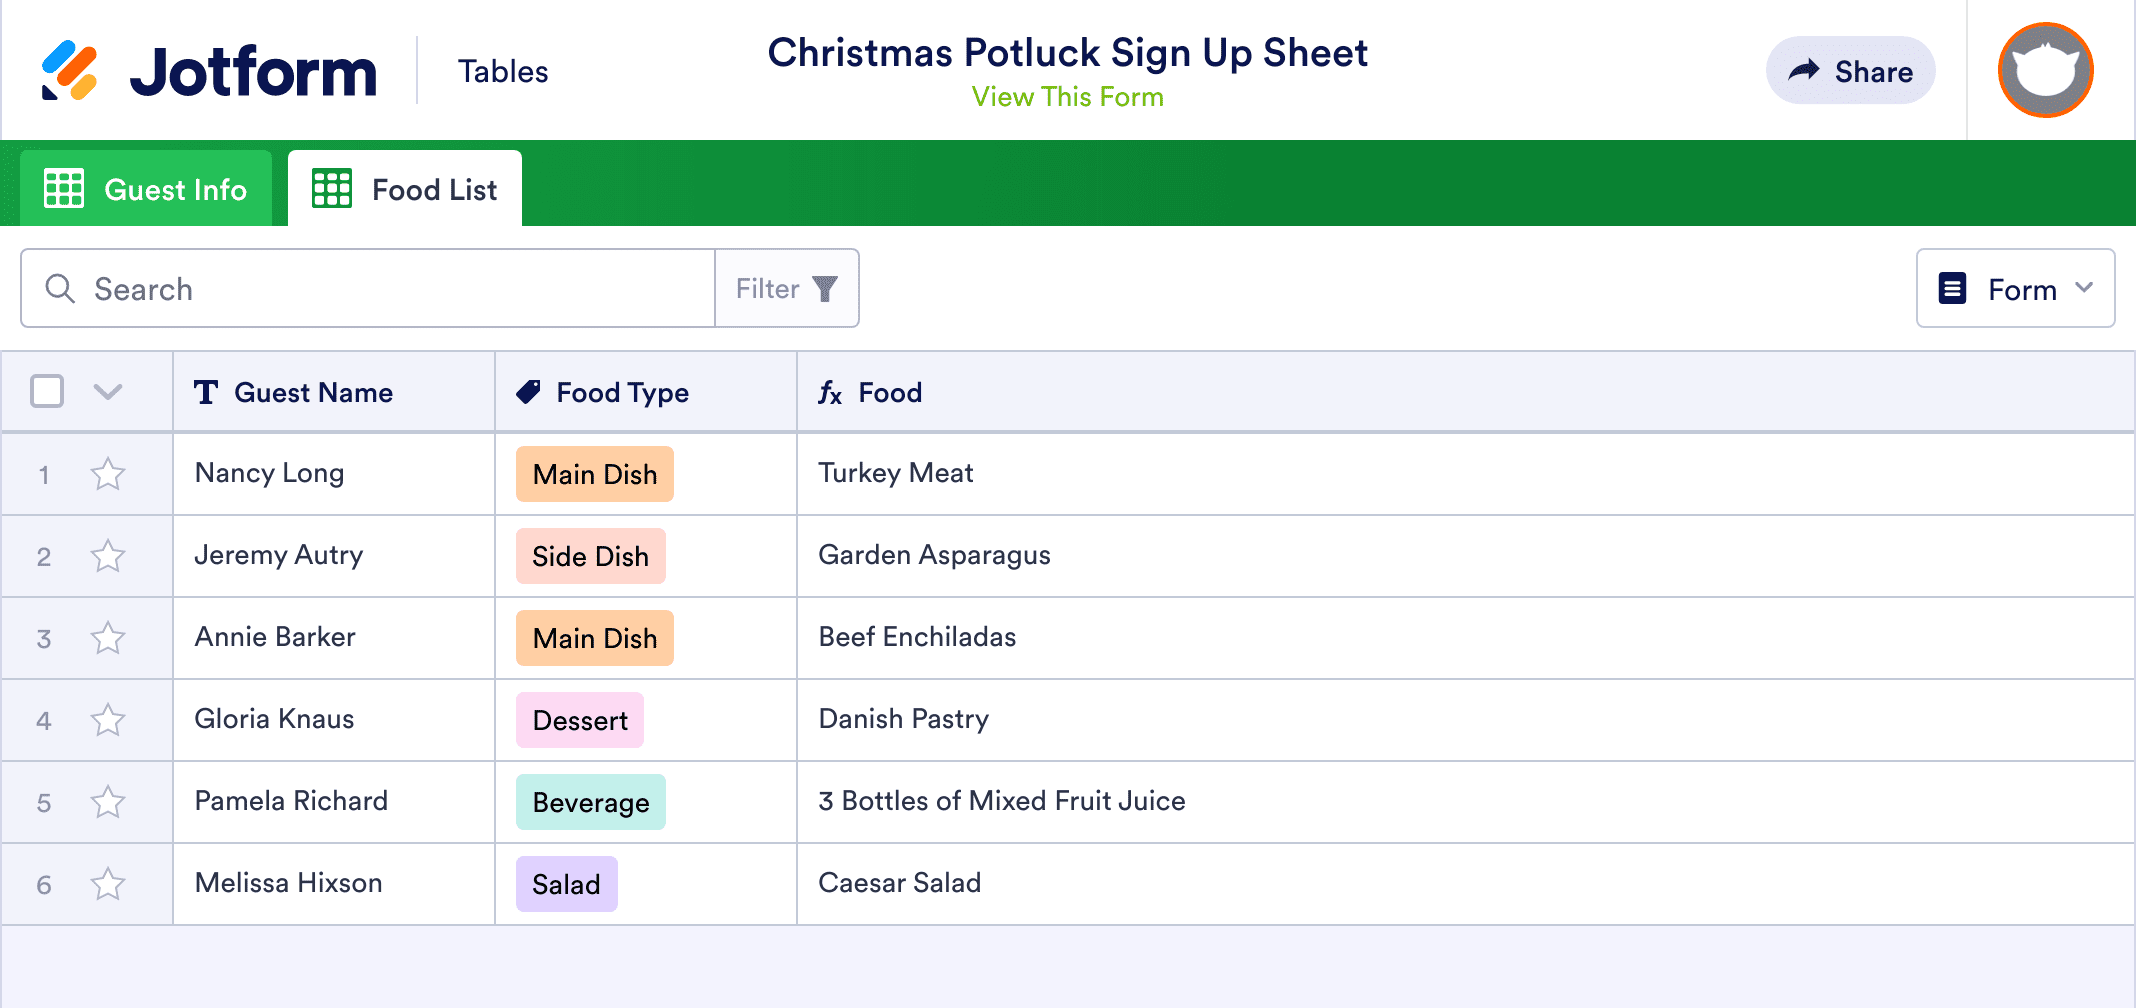 Christmas Potluck Sign Up Sheet